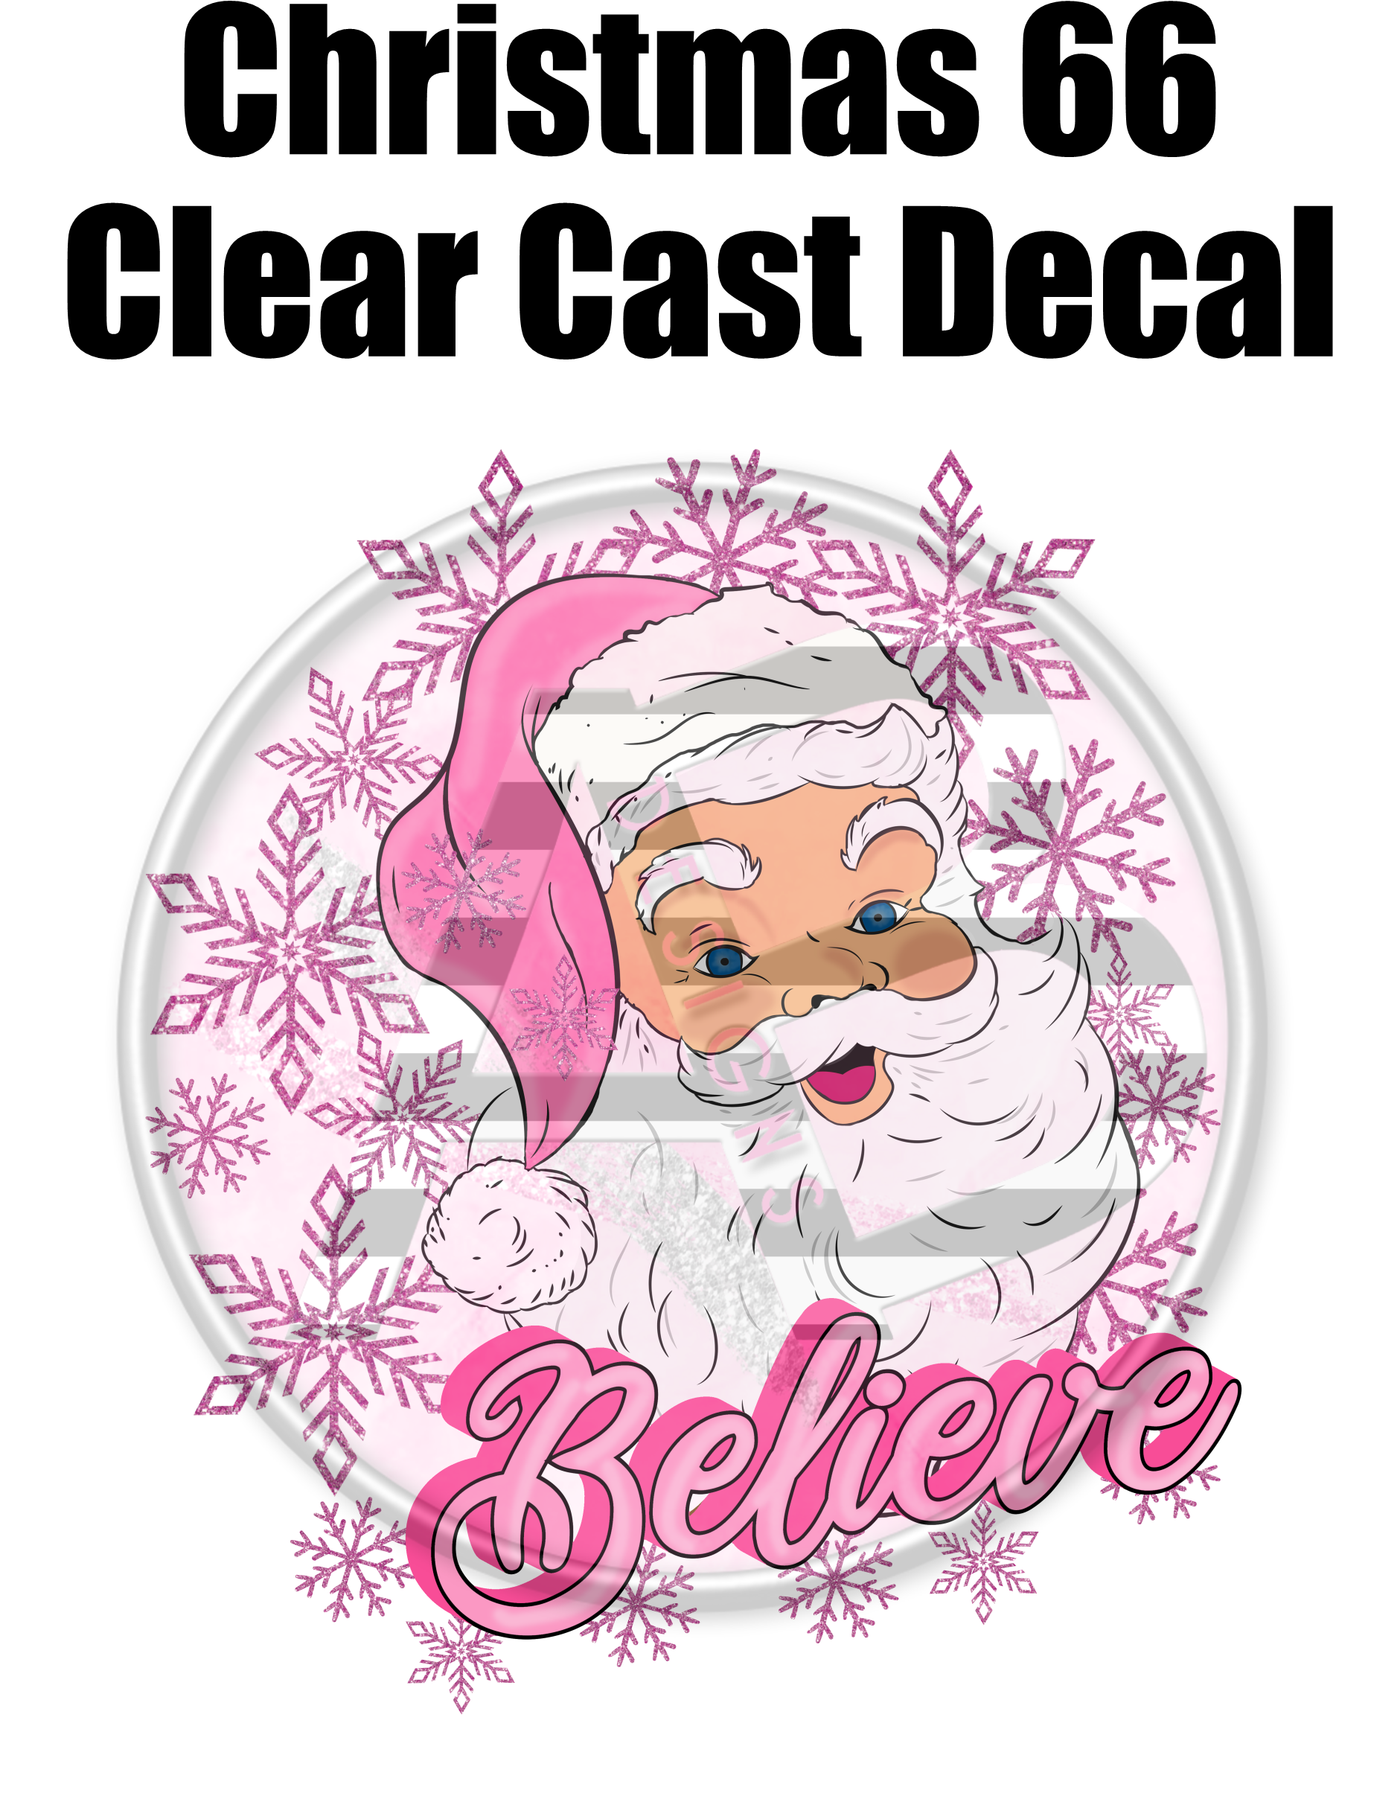 Christmas 66 - Clear Cast Decal